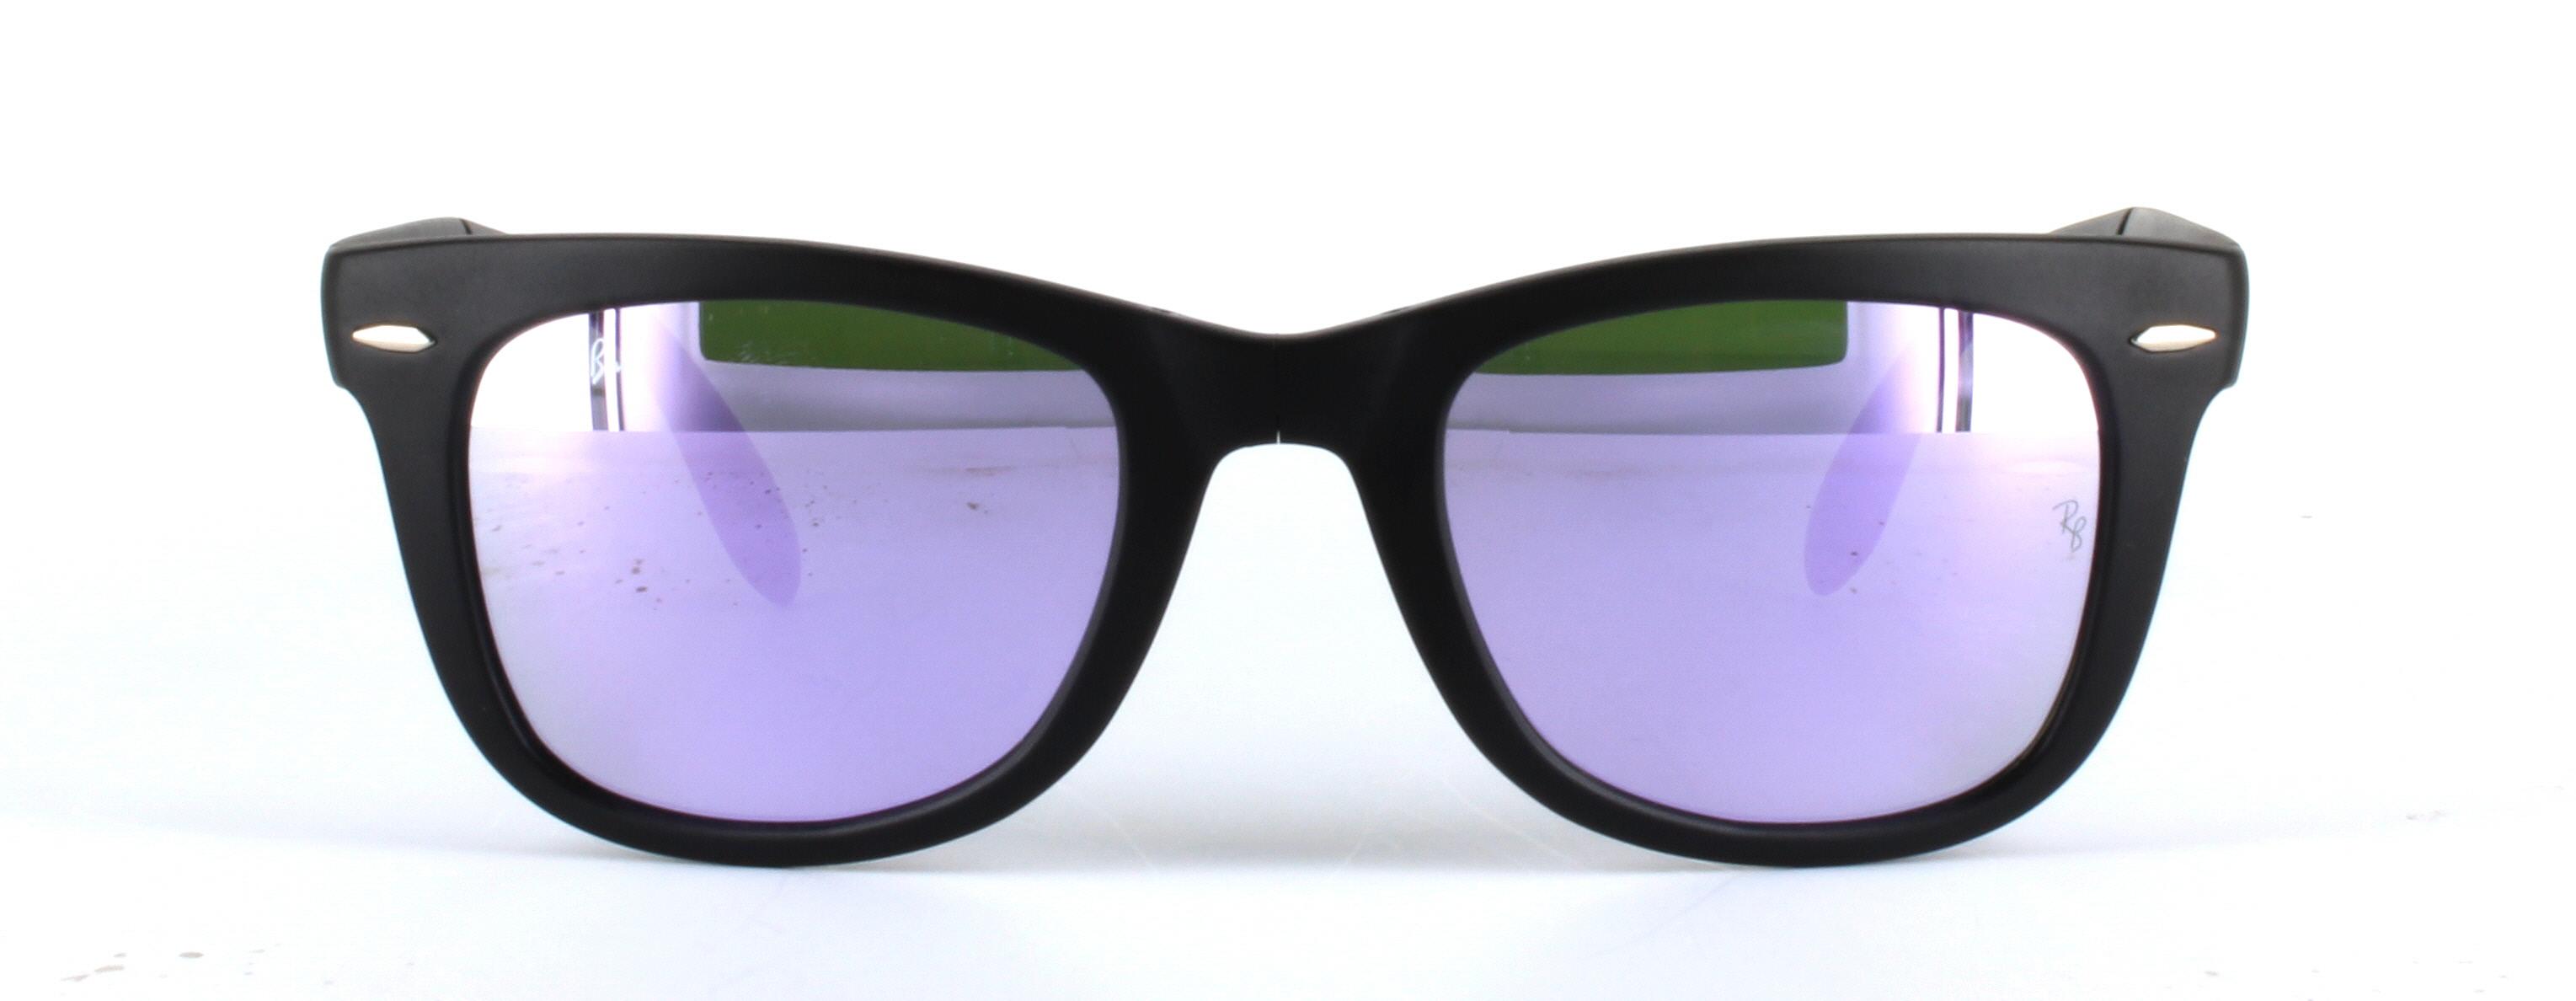 Ray Ban Folding Prescription Sunglasses In Black Rb4105 Glasses Online Glasses2you